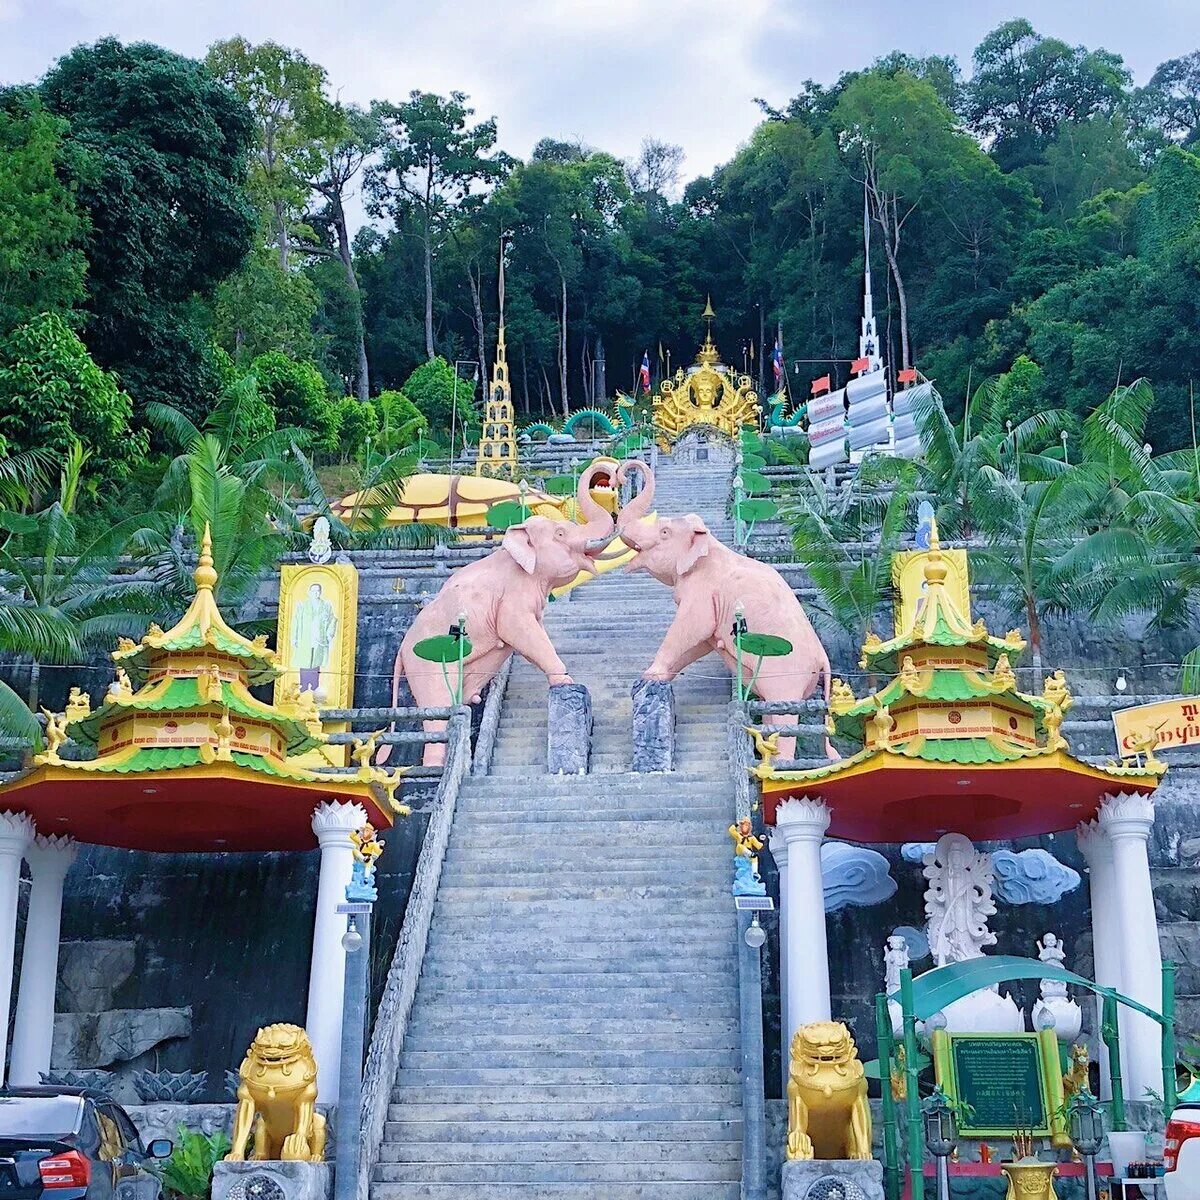 Храмы краби. Тигровый храм Краби. Храм тигра в Тайланде. Храм тигра в Тайланде Краби.